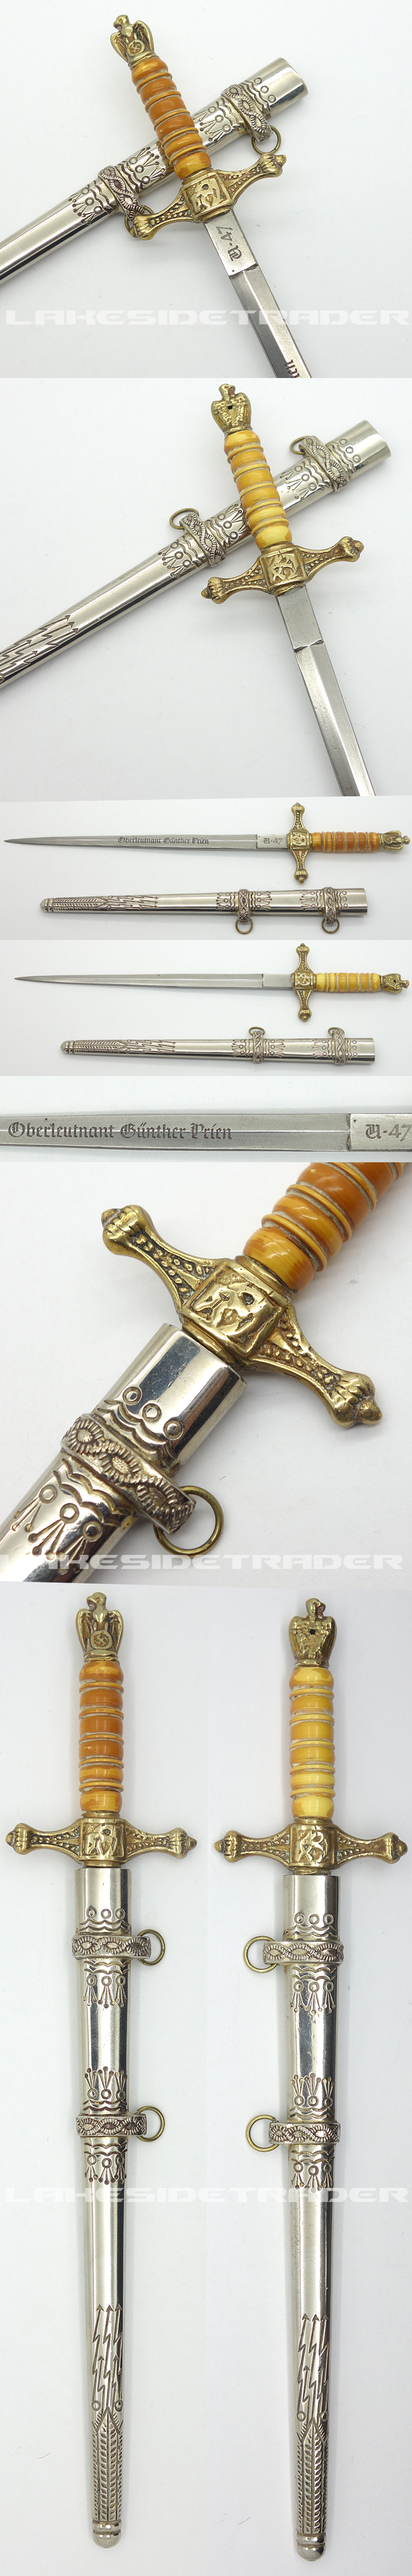 Miniature Navy Dagger Gunther Prien Commemorative